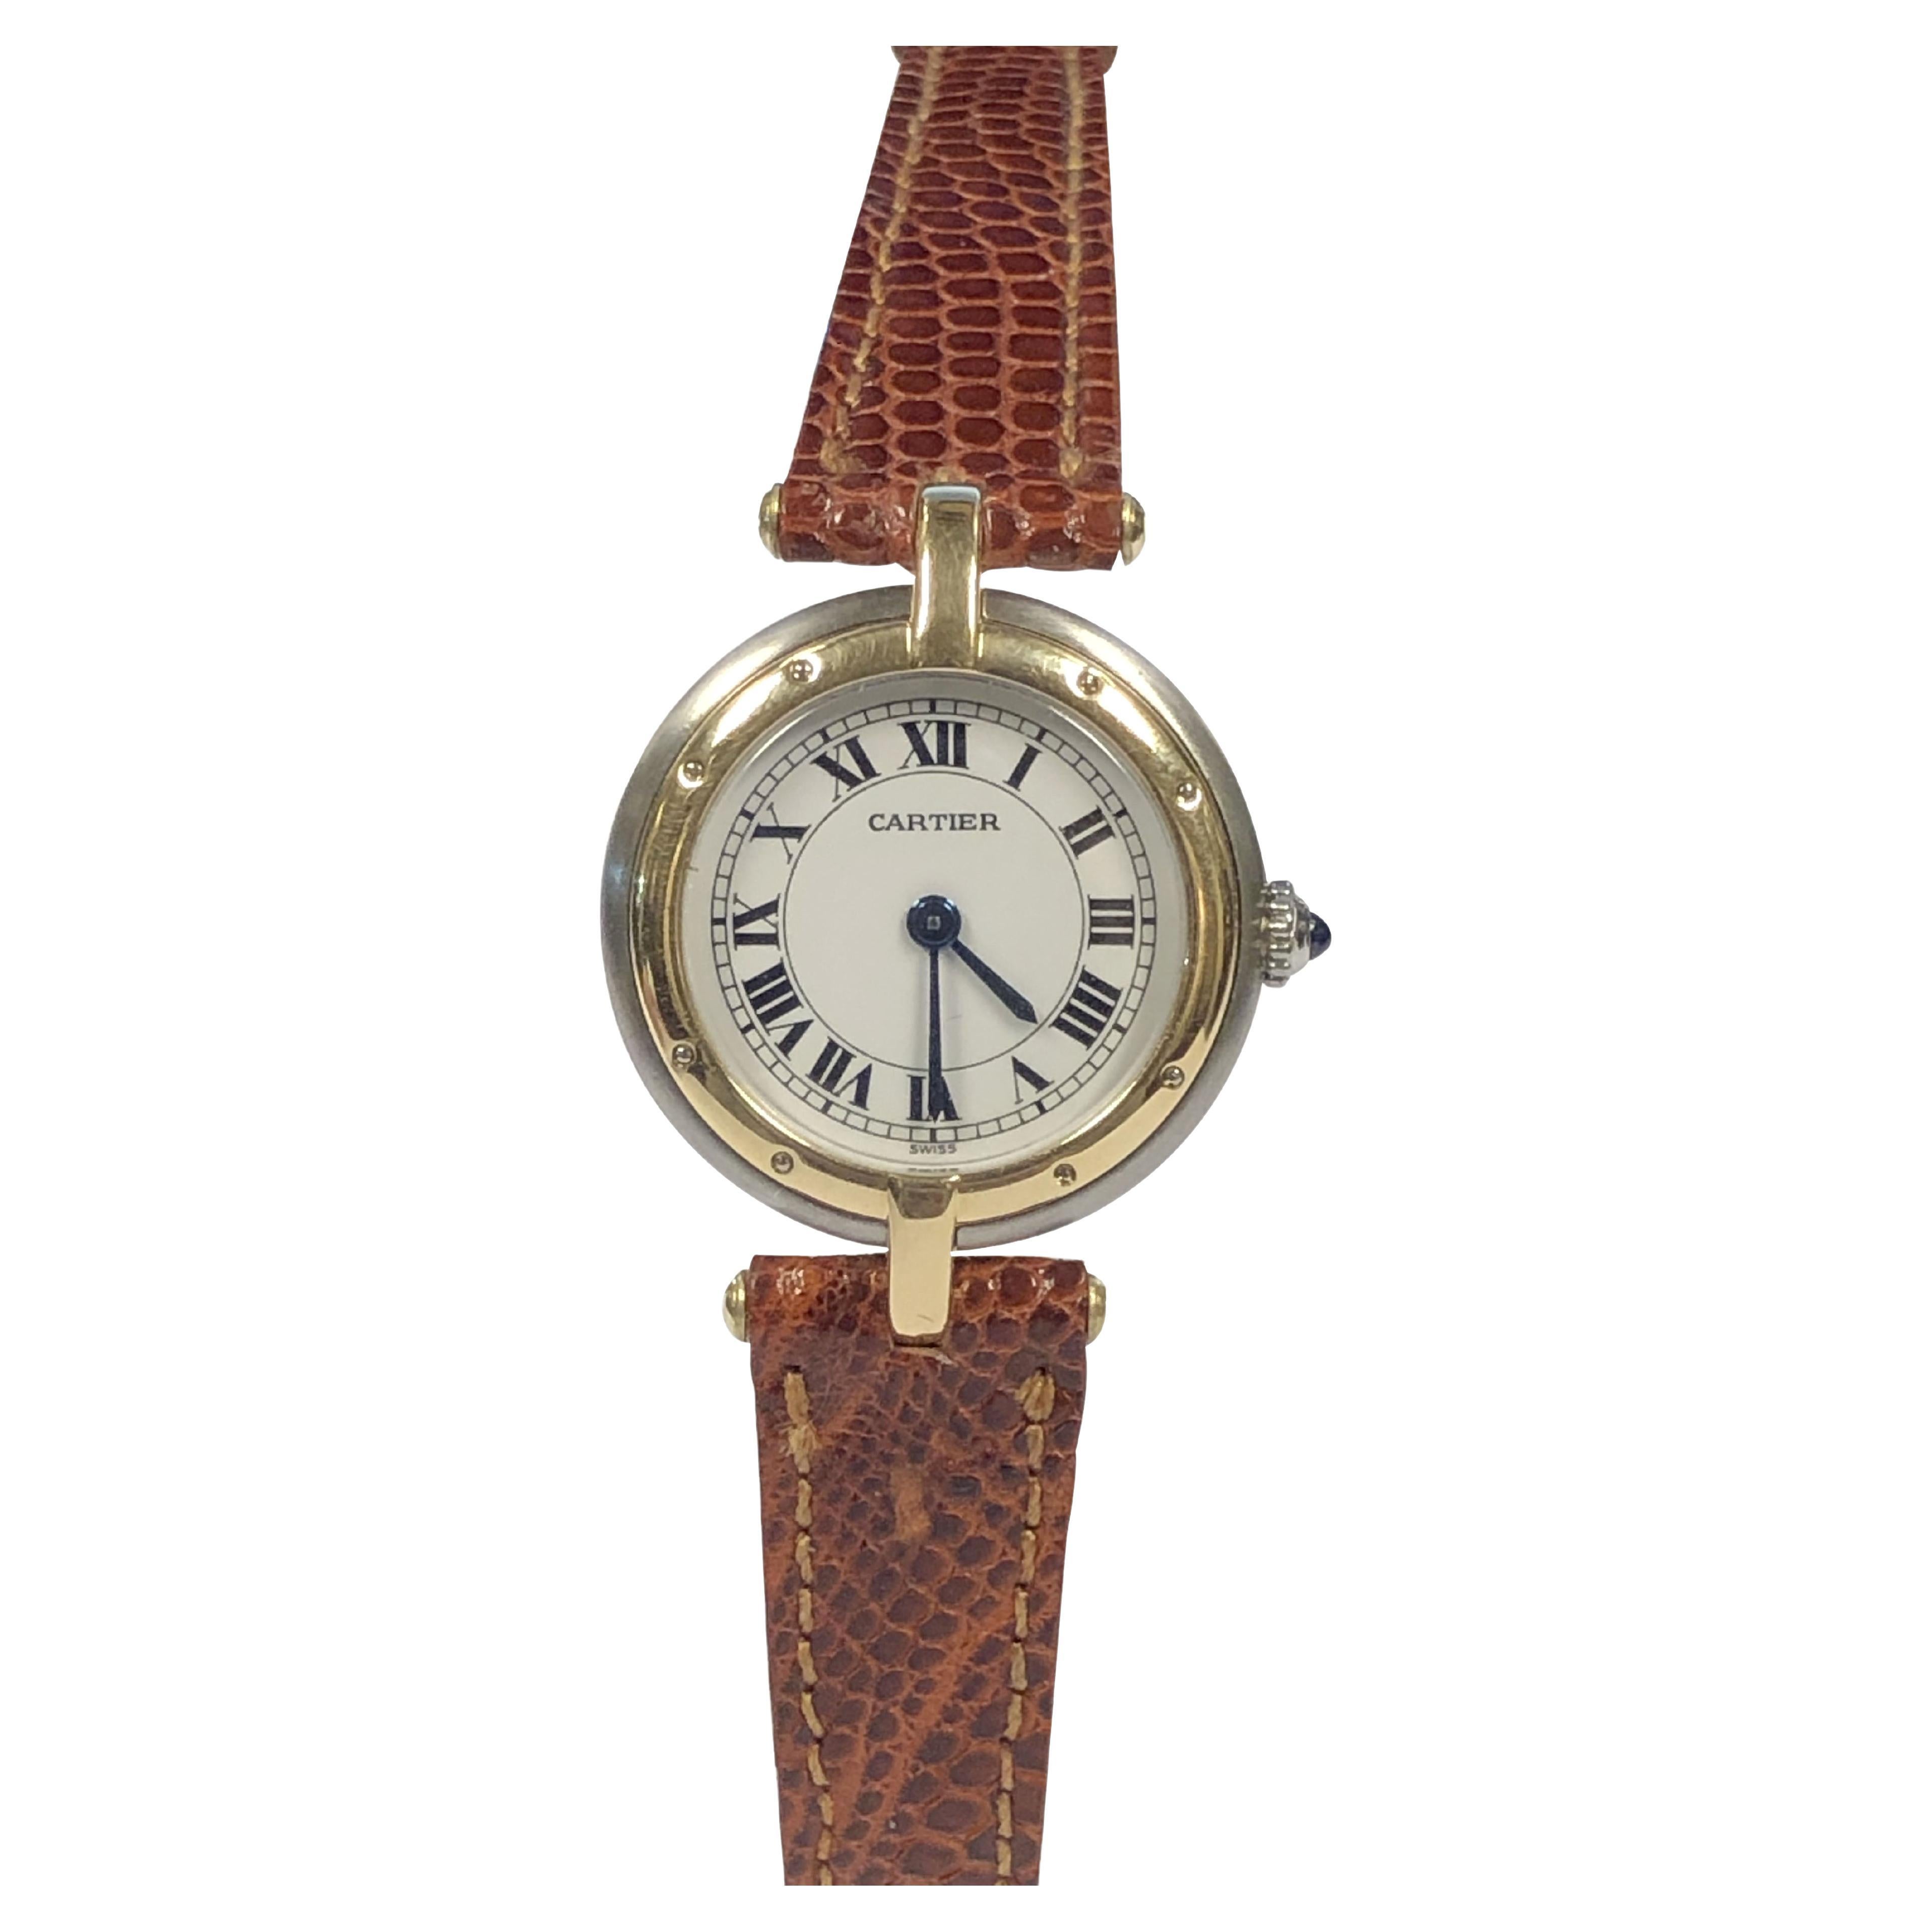 Cartier Santos Ronde Steel and Gold Ladies Wrist Watch